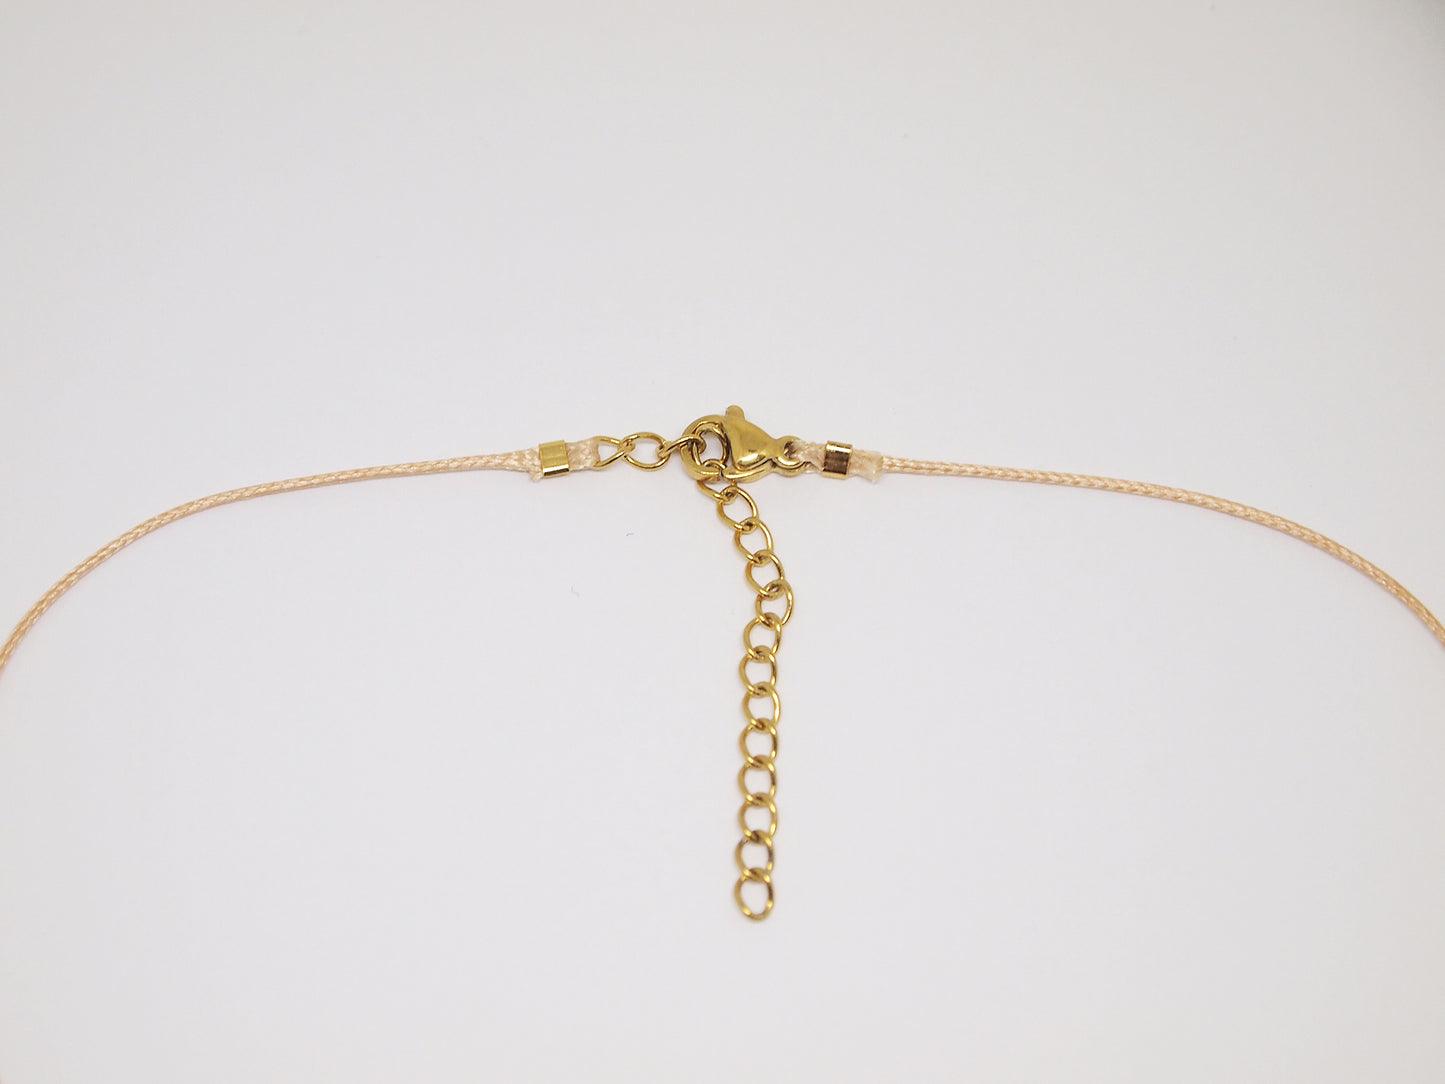 Angelite cord necklace